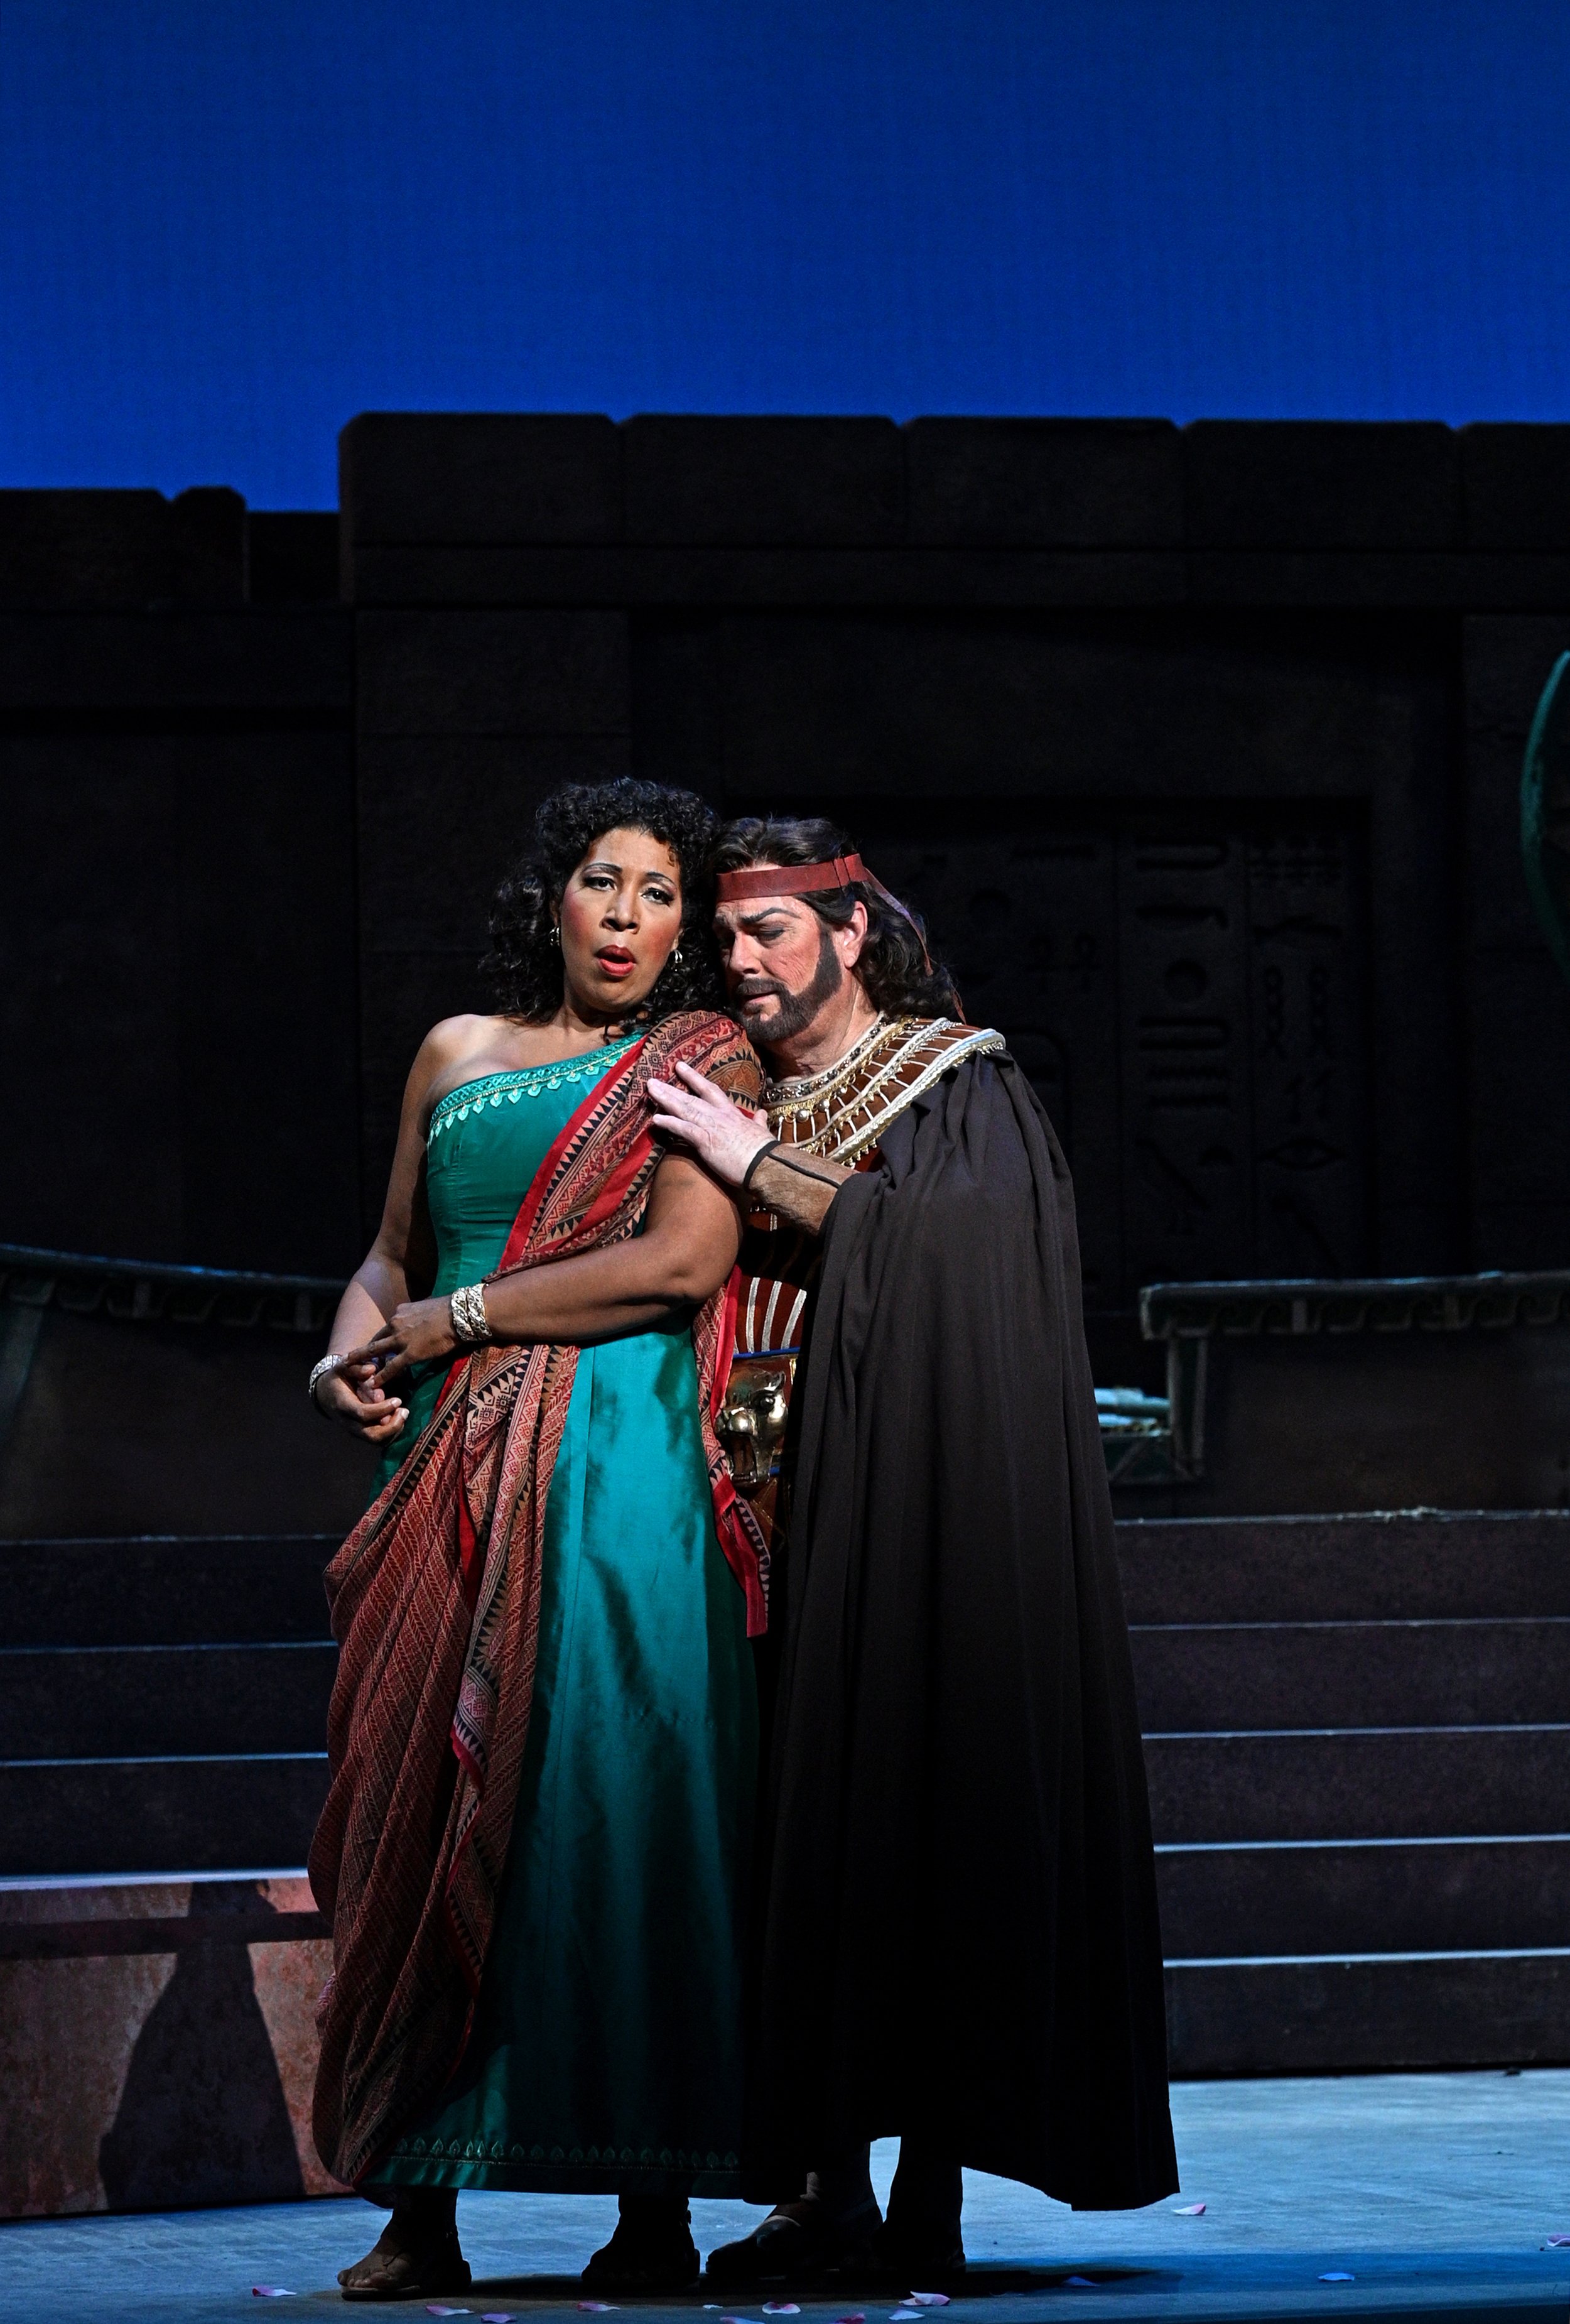  Mary Elizabeth Williams as Aida, Gregory Kunde as Radamès. Photo by Philip Groshong. 